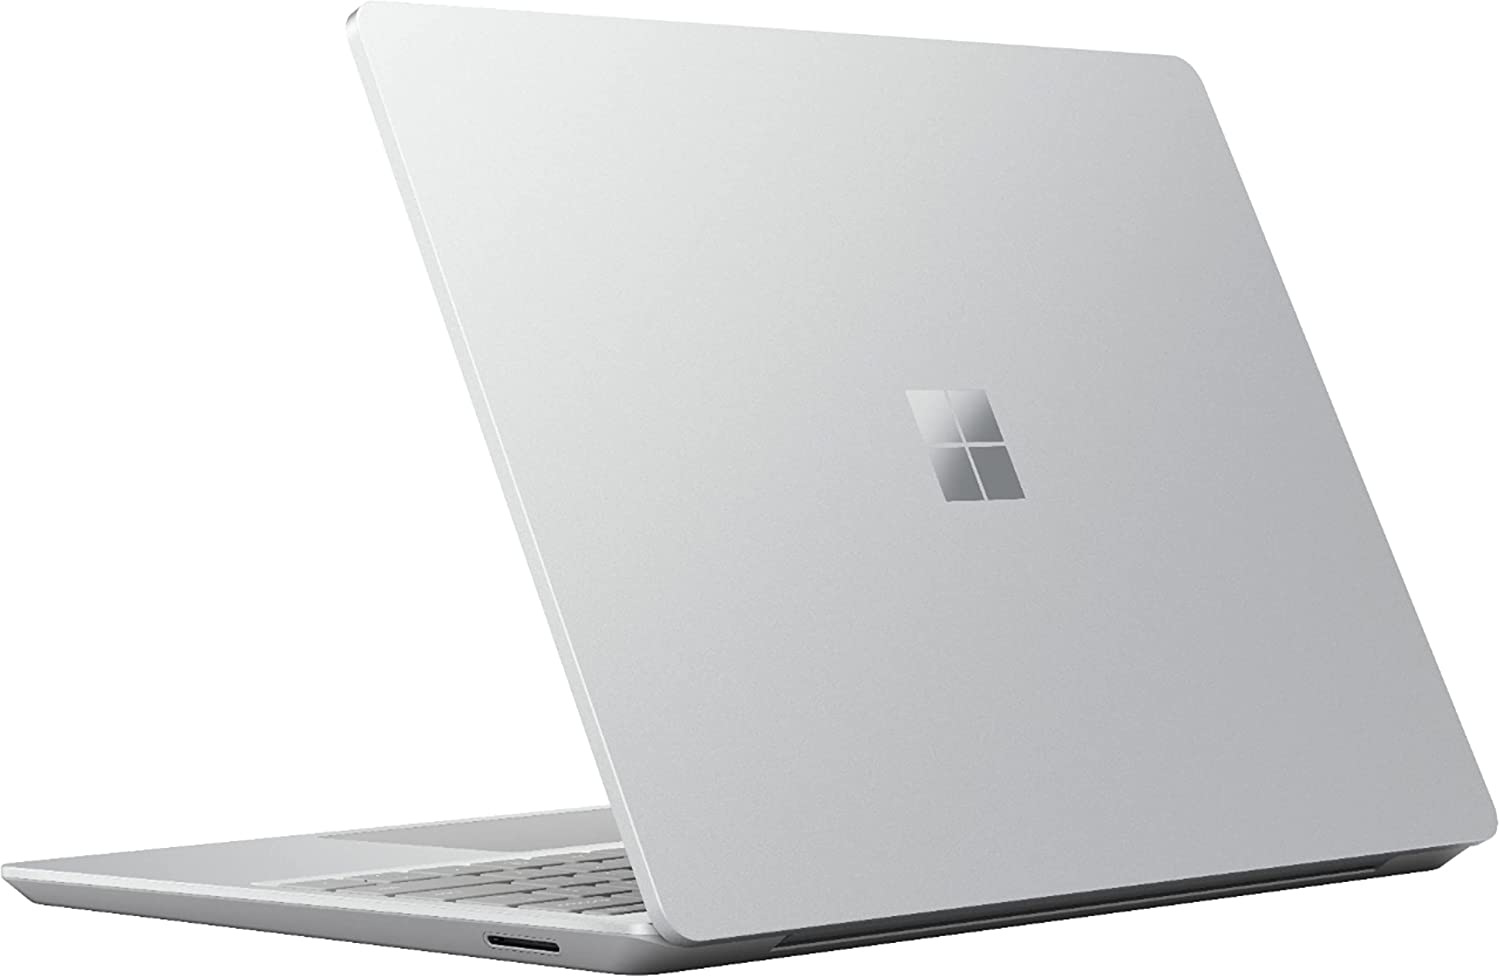 Microsoft Surface Laptop Go Core™ i5-1035G1 128GB SSD 8GB 12.4" (1536x1024) TOUCHSCREEN WIN10 S PLATINUM - Renewed